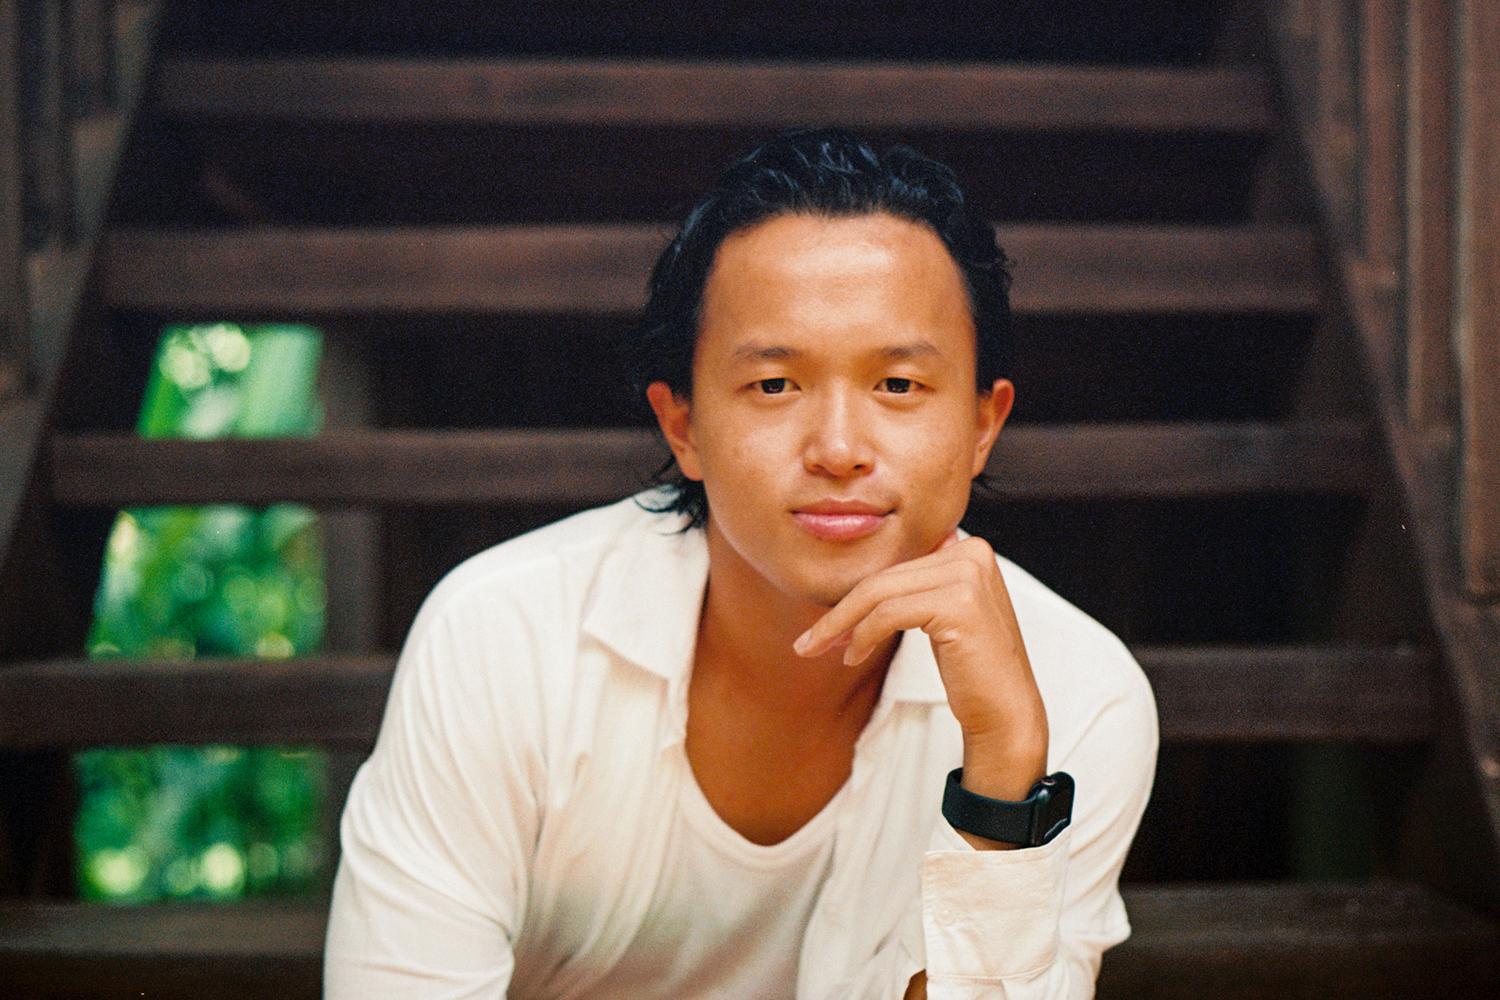 Chheangkea's screenplay “Little Phnom Penh” is one of three chosen for HamptonsFilm's annual Screenwriters Lab. COURTESY HAMPTONSFILM